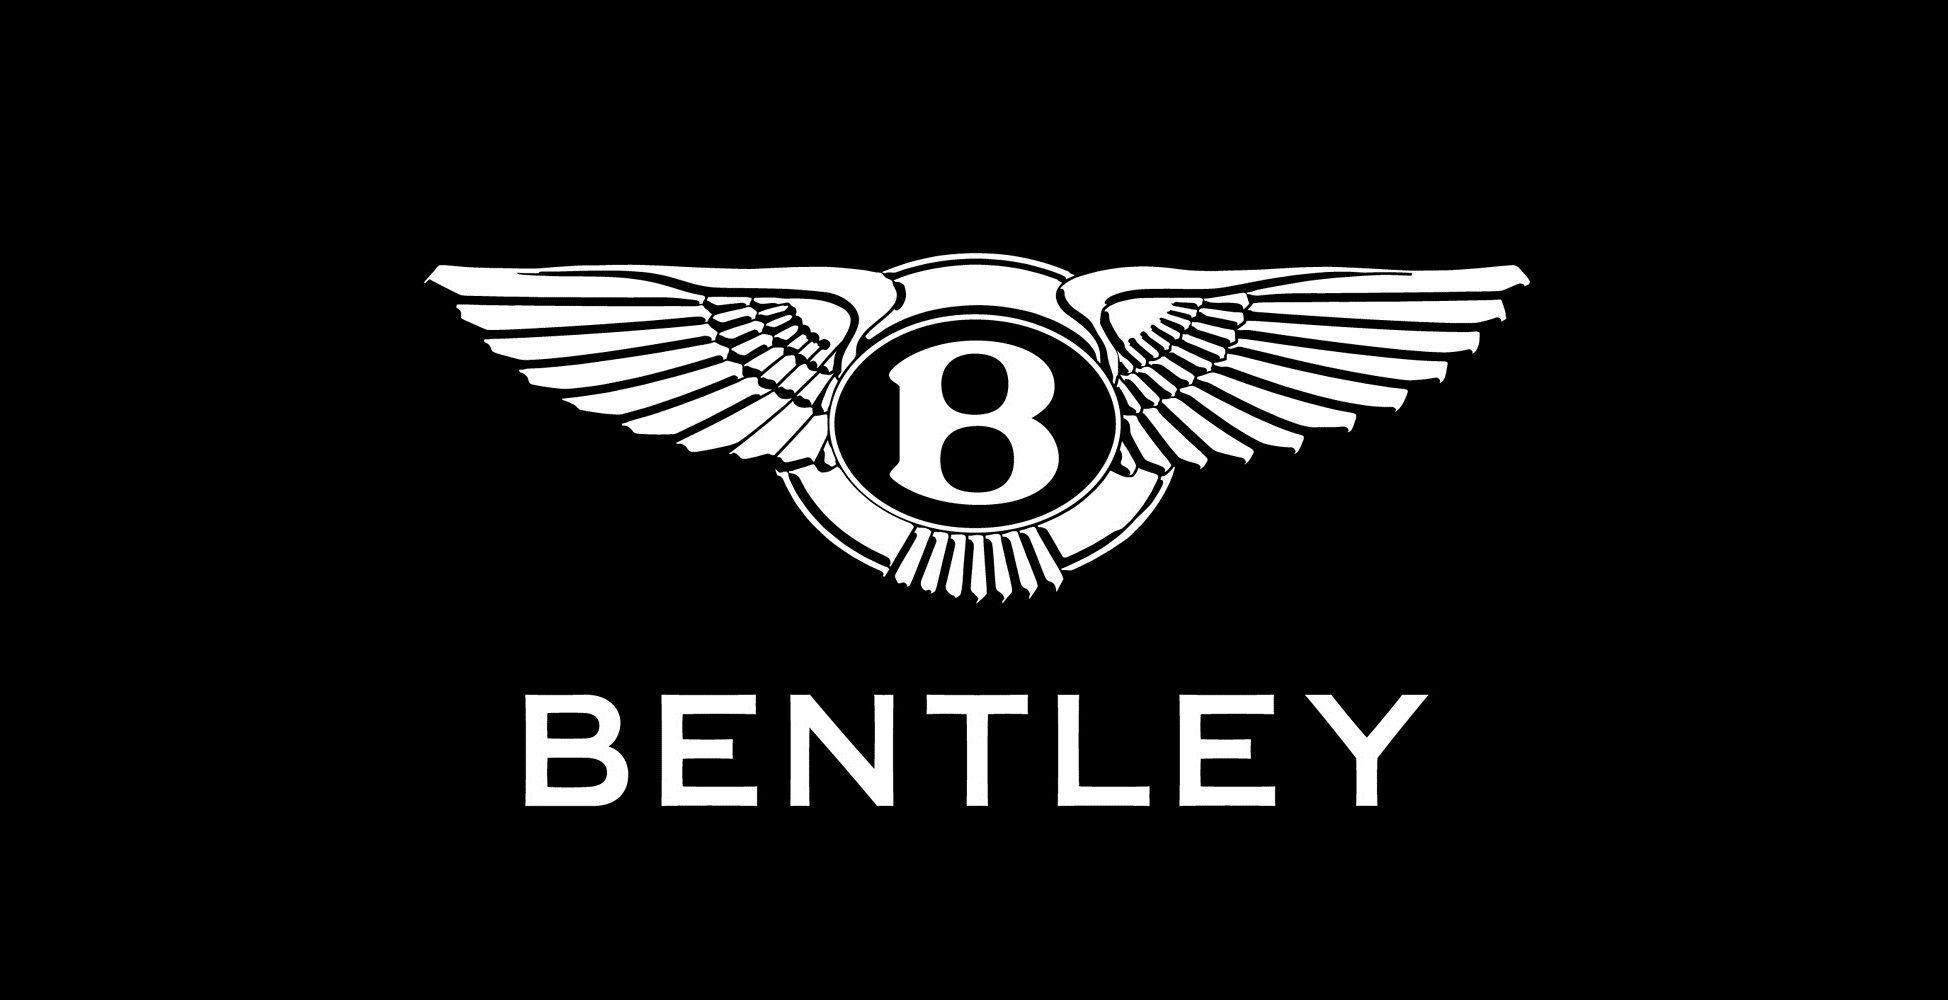 Bentley logo hd